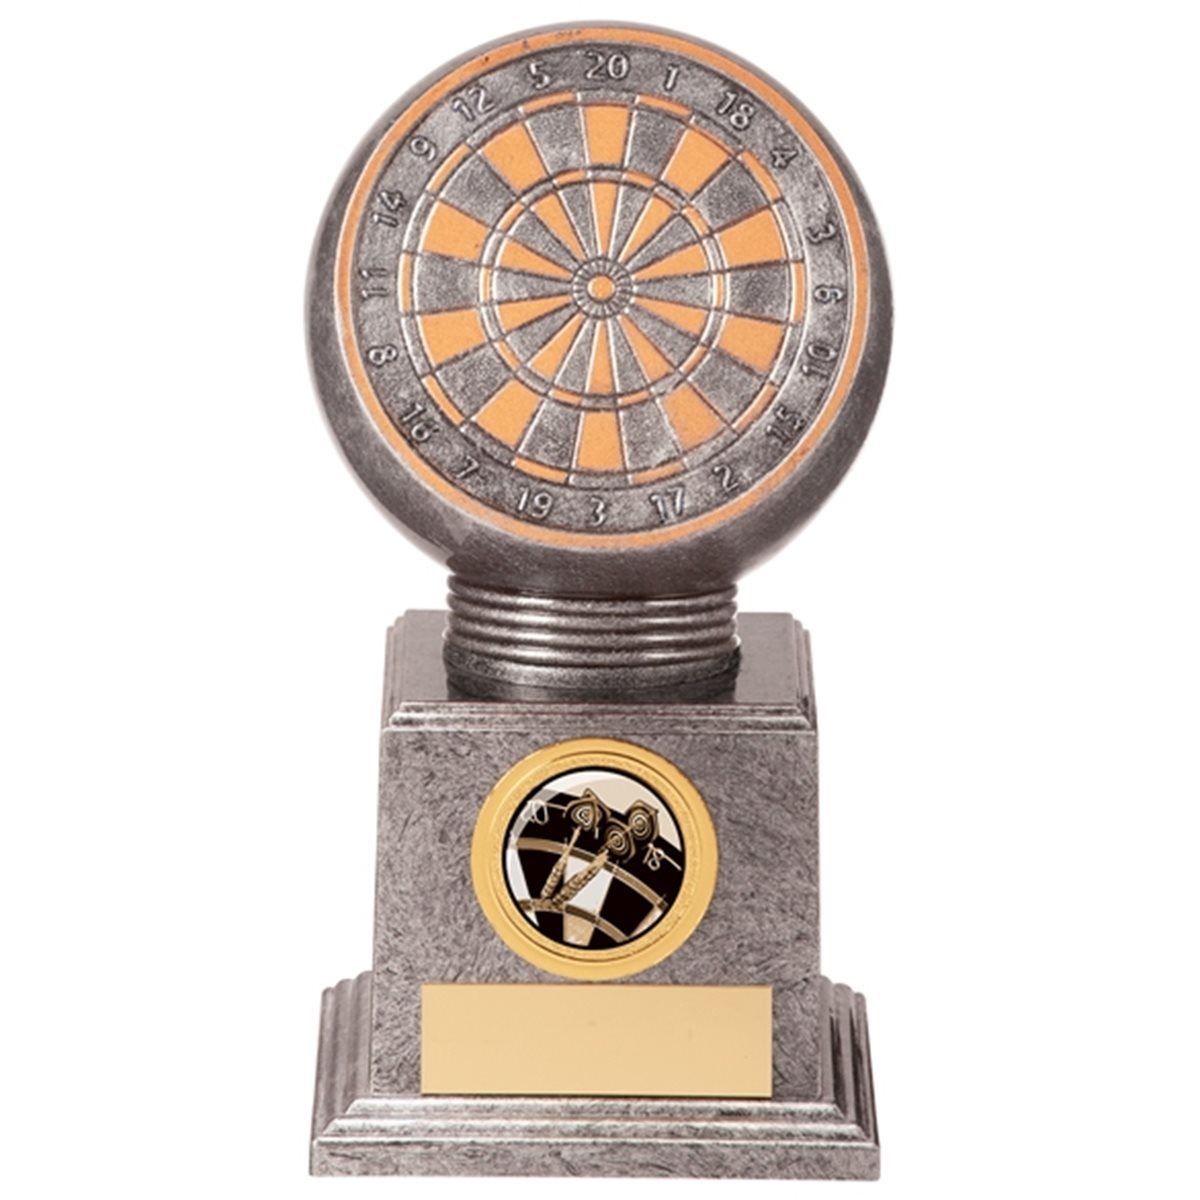 Valiant Legend Darts Trophy TH20240